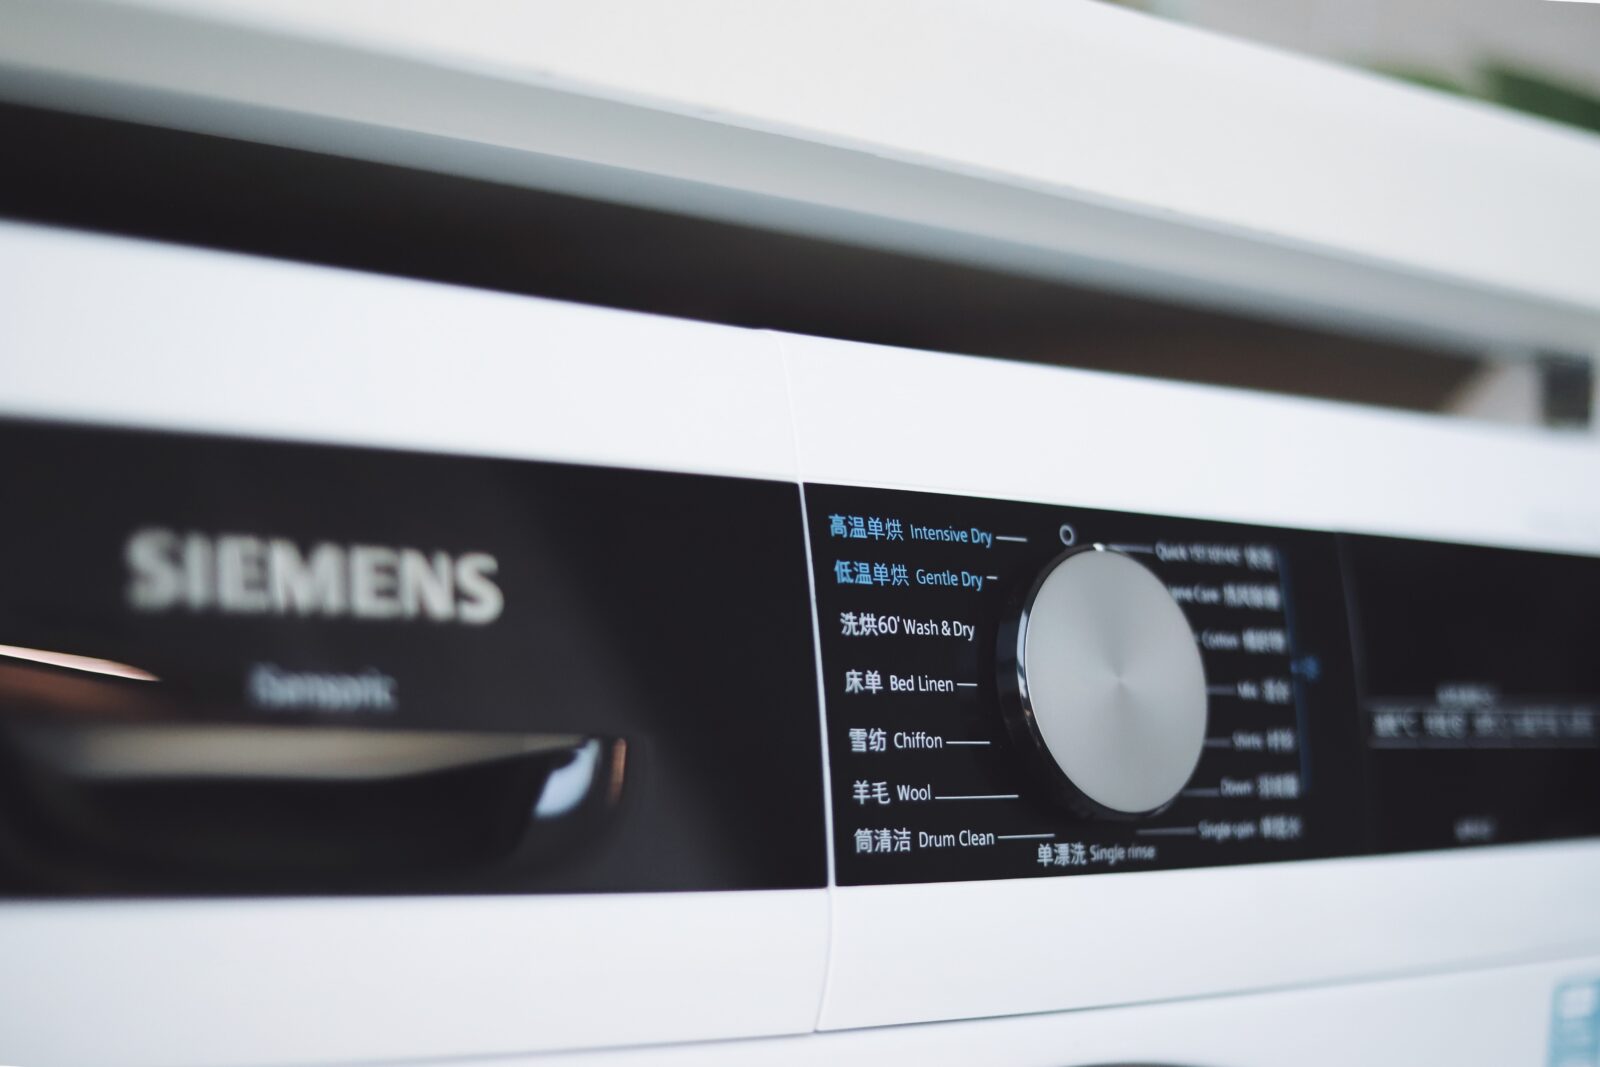 Control panel of a Siemens washing machine